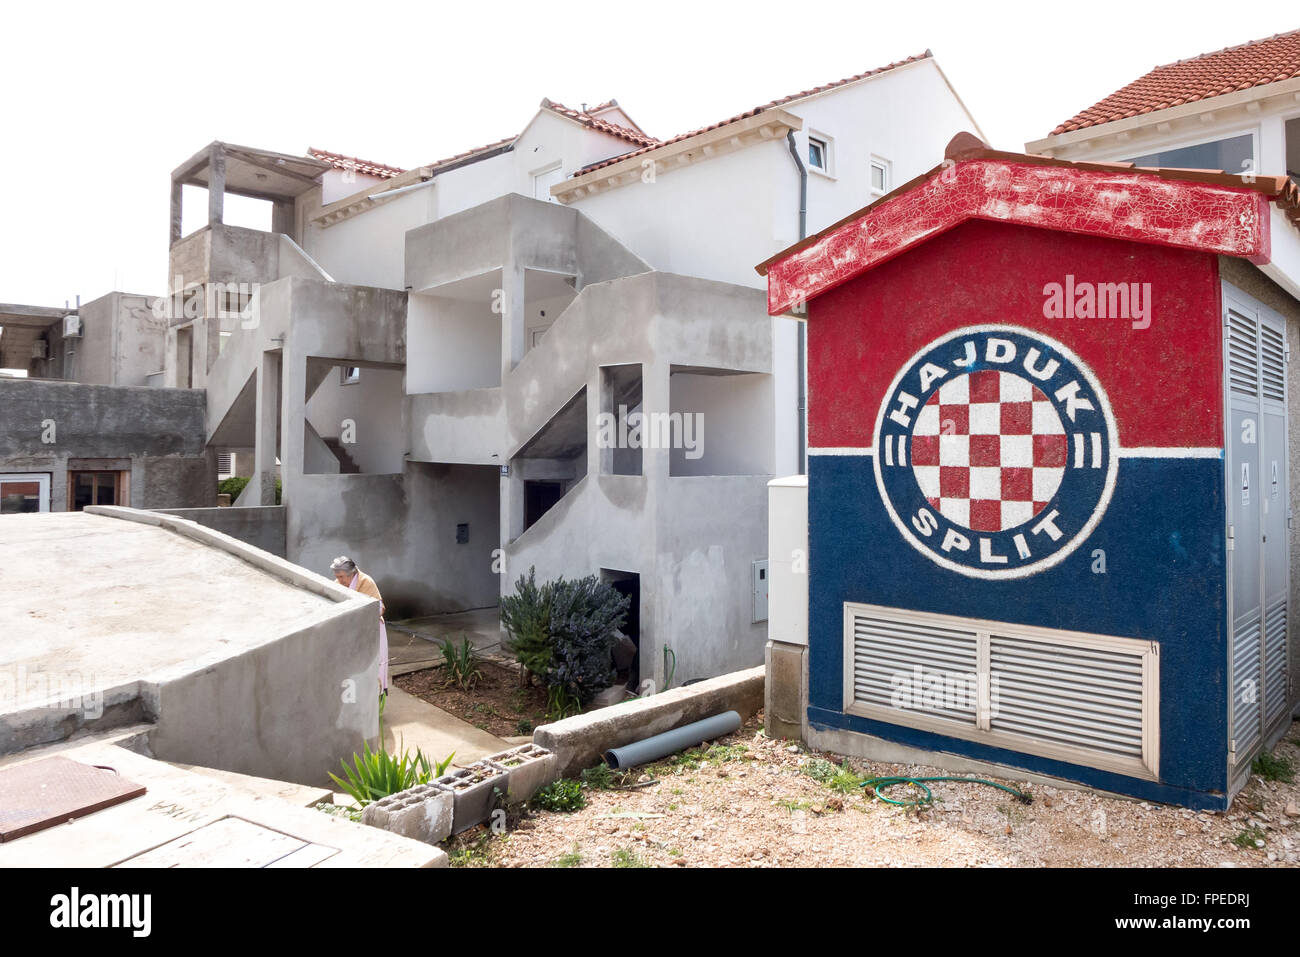 Scarf HNK Hajduk Split Football club Croatian First League